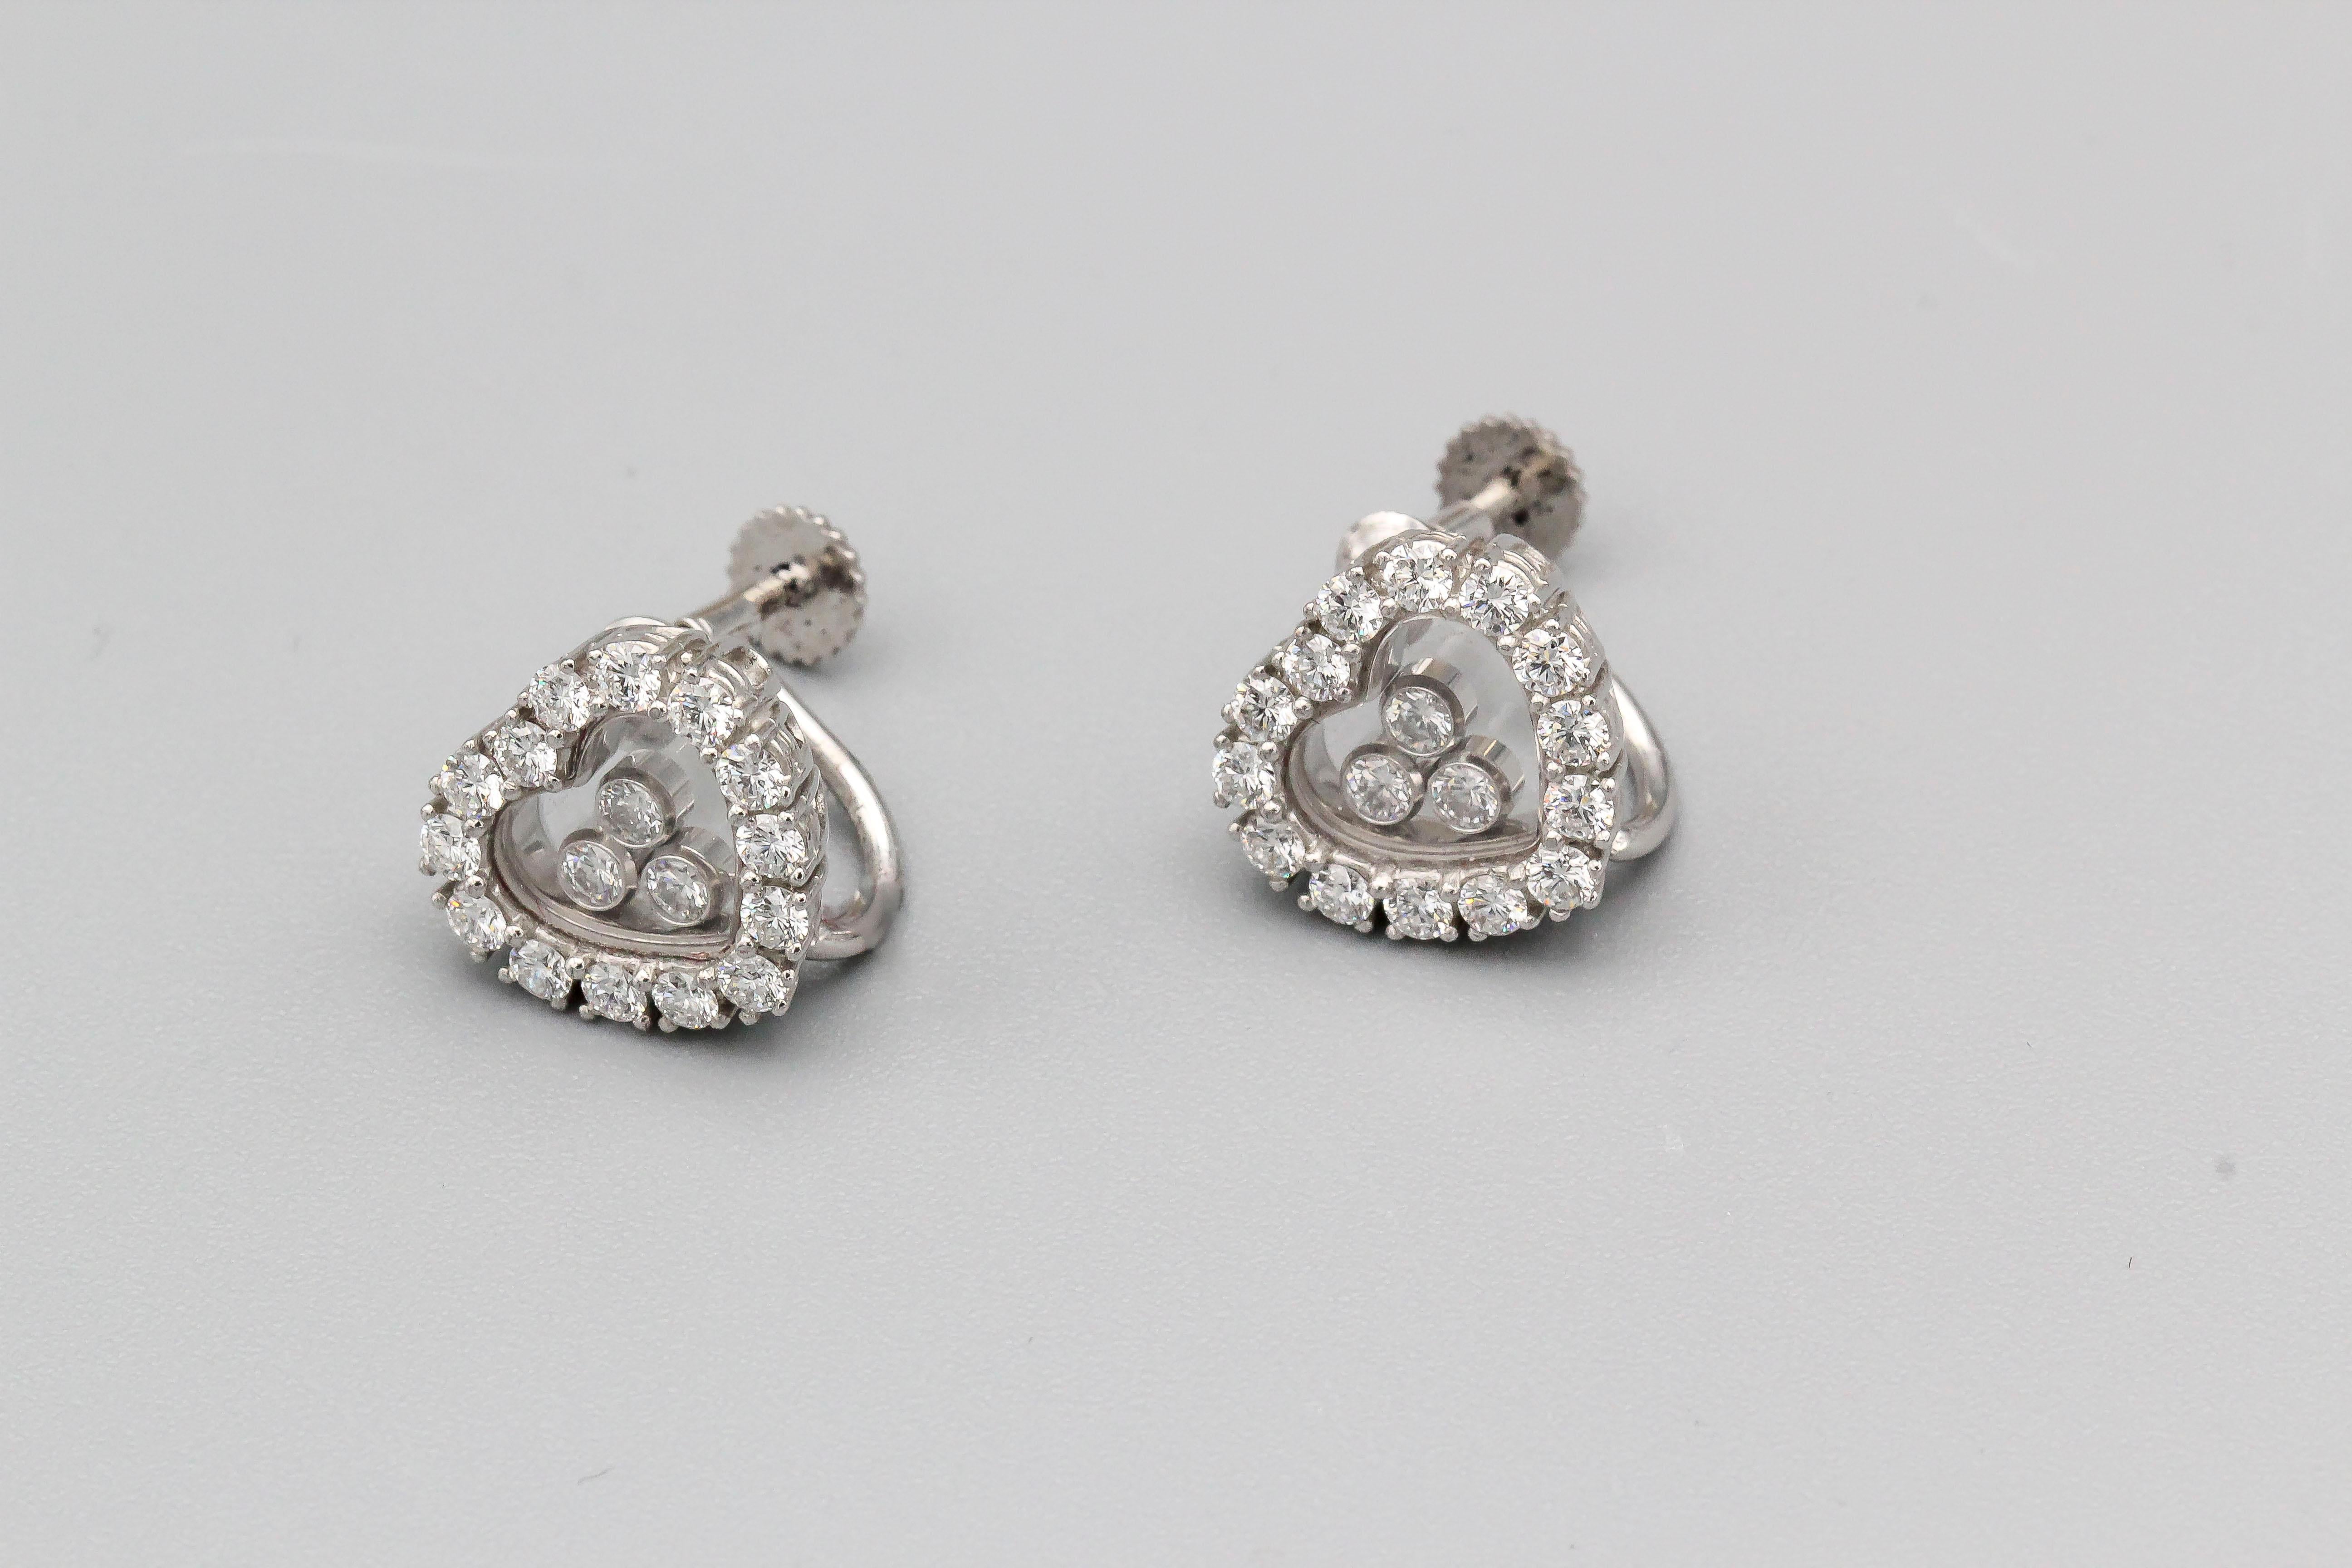 Contemporary Chopard Happy Diamond 18 Karat White Gold Earrings for Non Pierced Ears